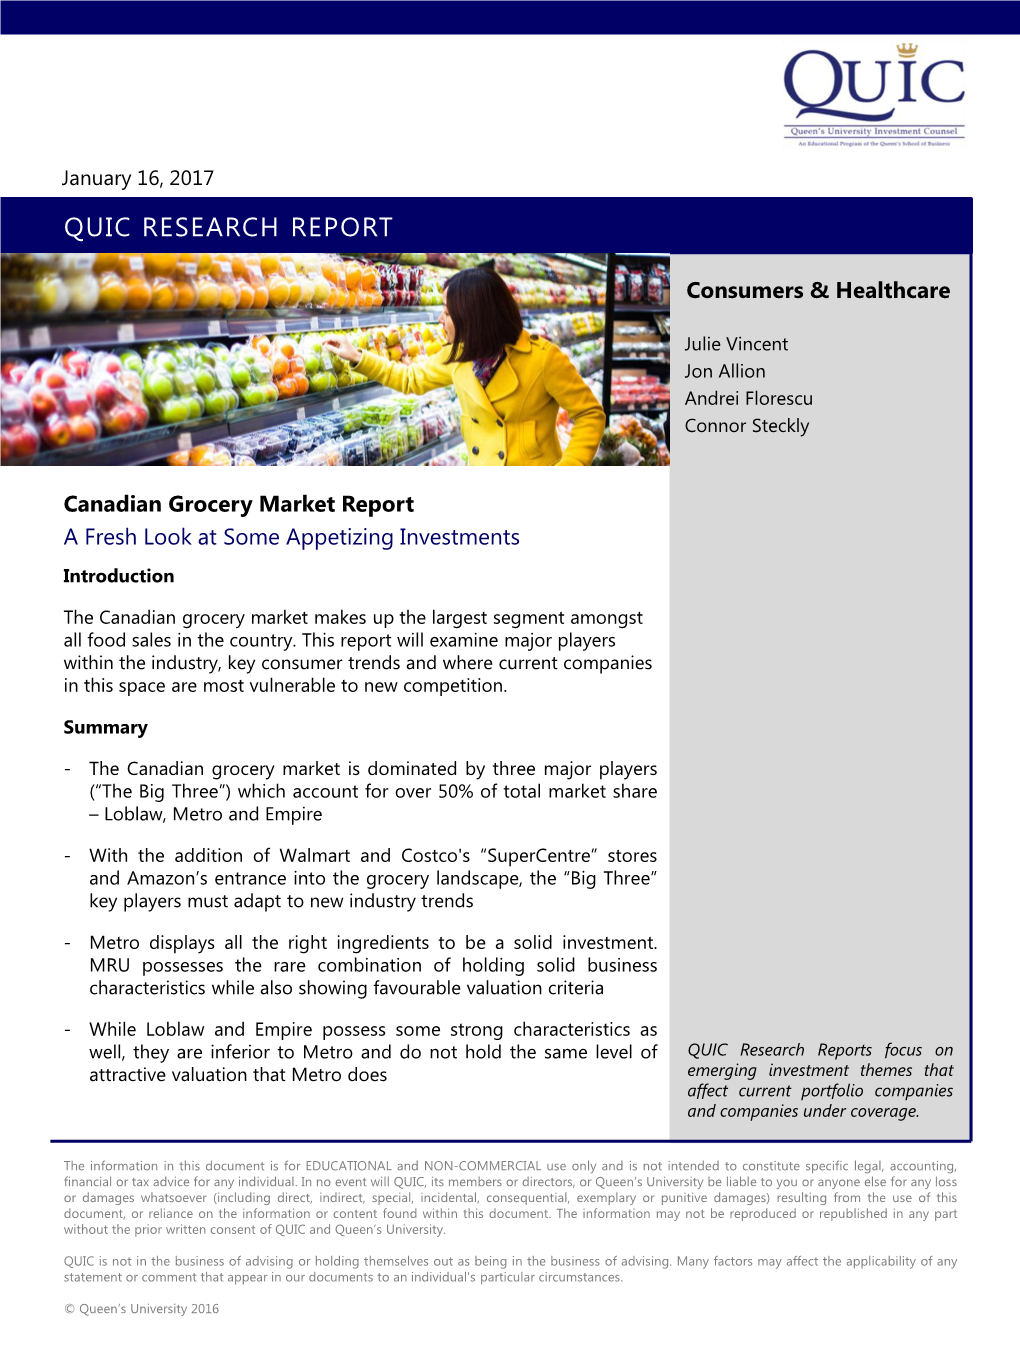 Q Canadian Grocery Market Report Quiconline.Com